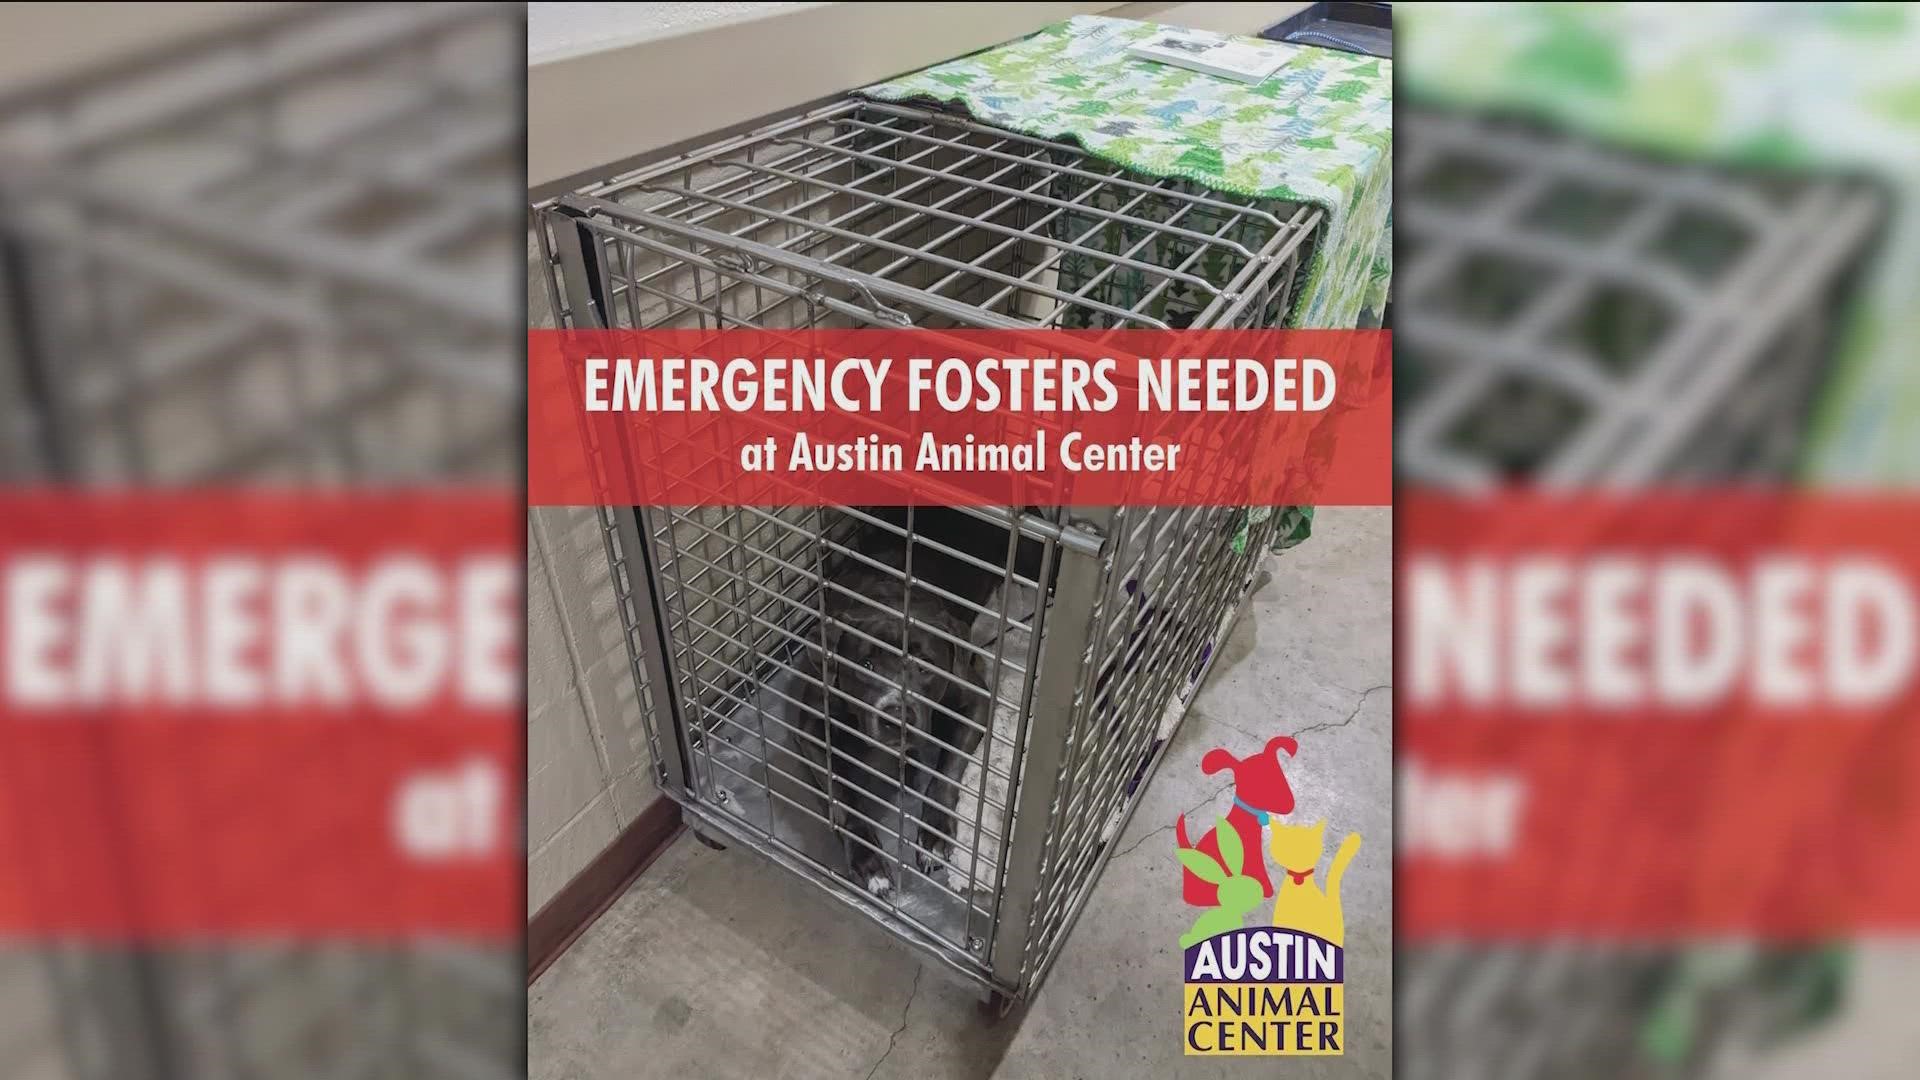 The Austin Animal Center says it needs help immediately.